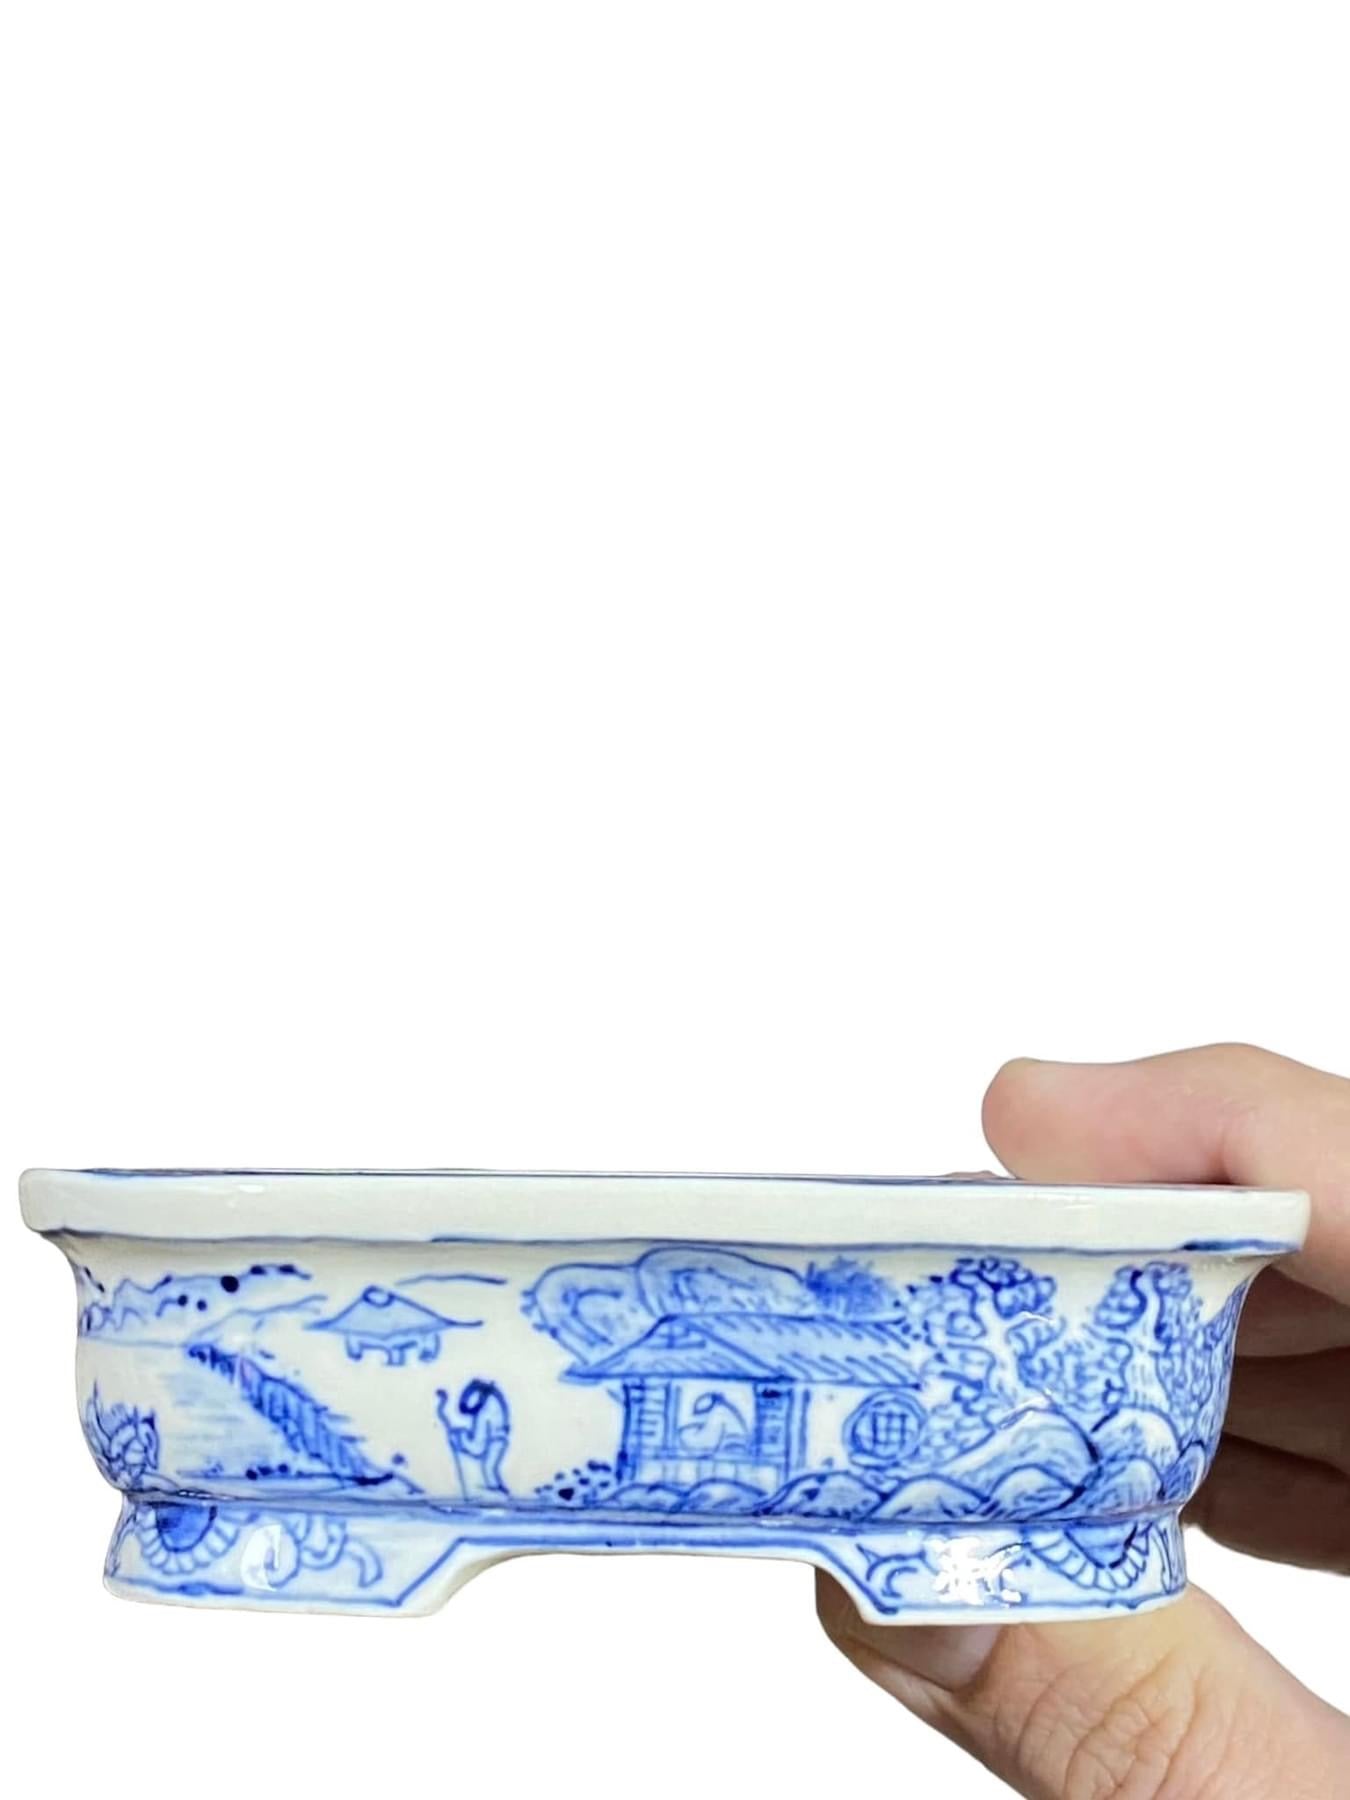 Joshu Katsuyama - Rare Exhibition Quality Painted Blue Bonsai Pot (4-1/8" wide)